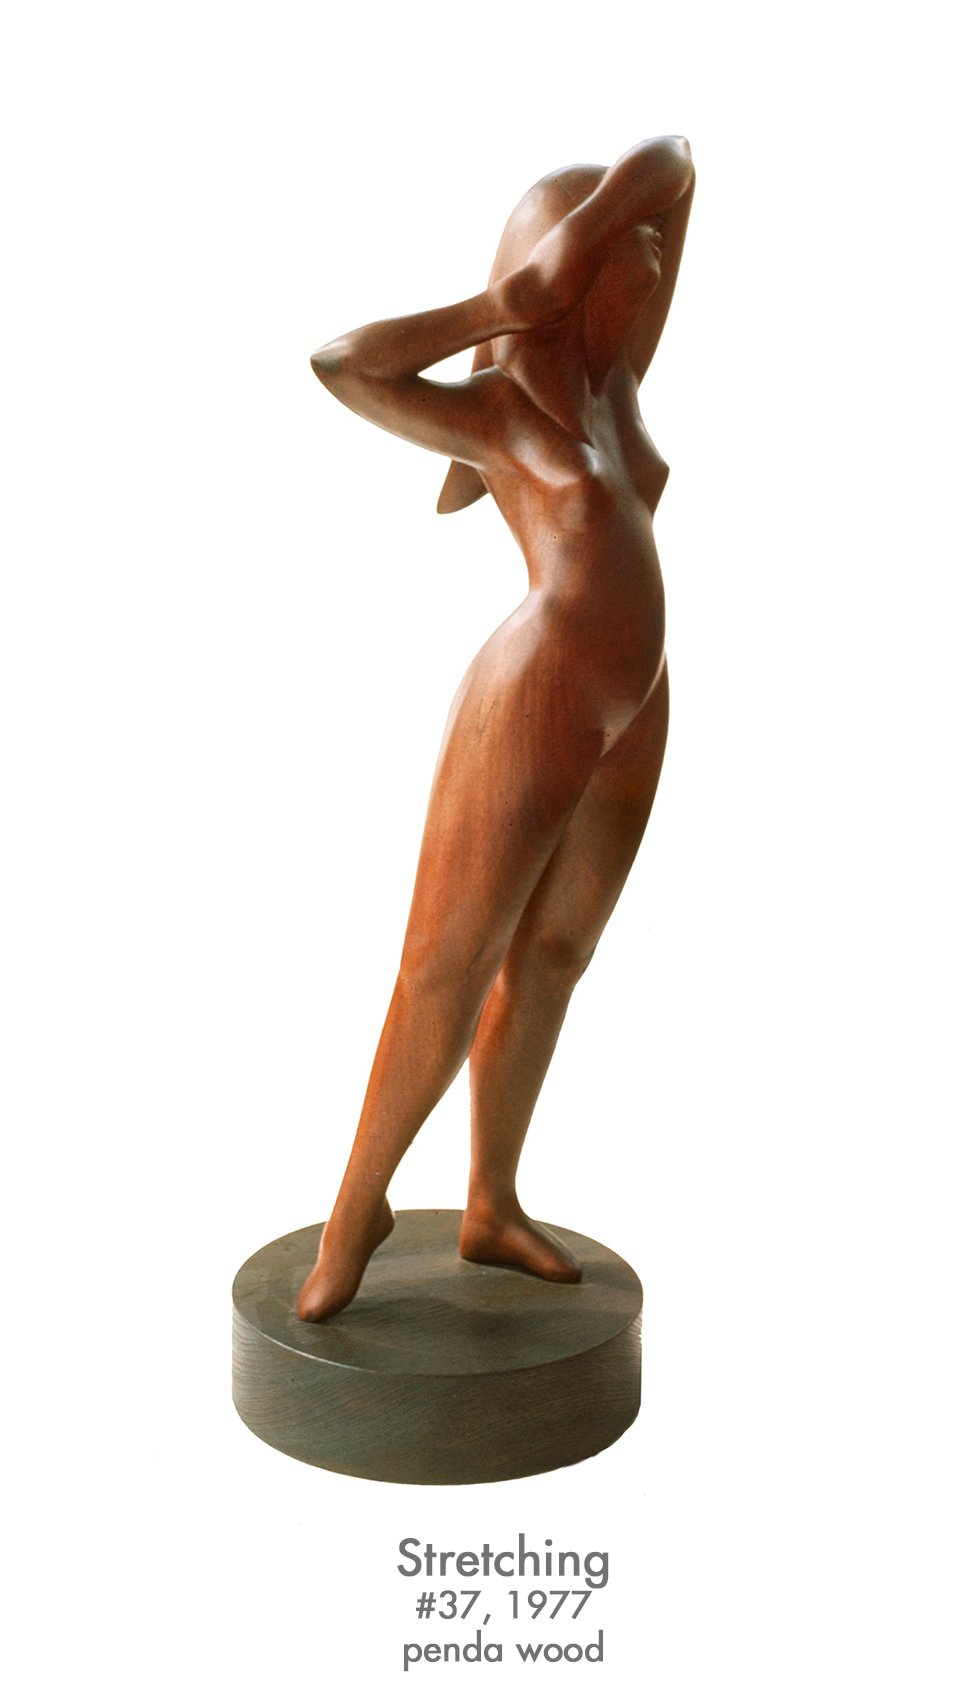 Woman Stretching, 1977, penda wood, #37